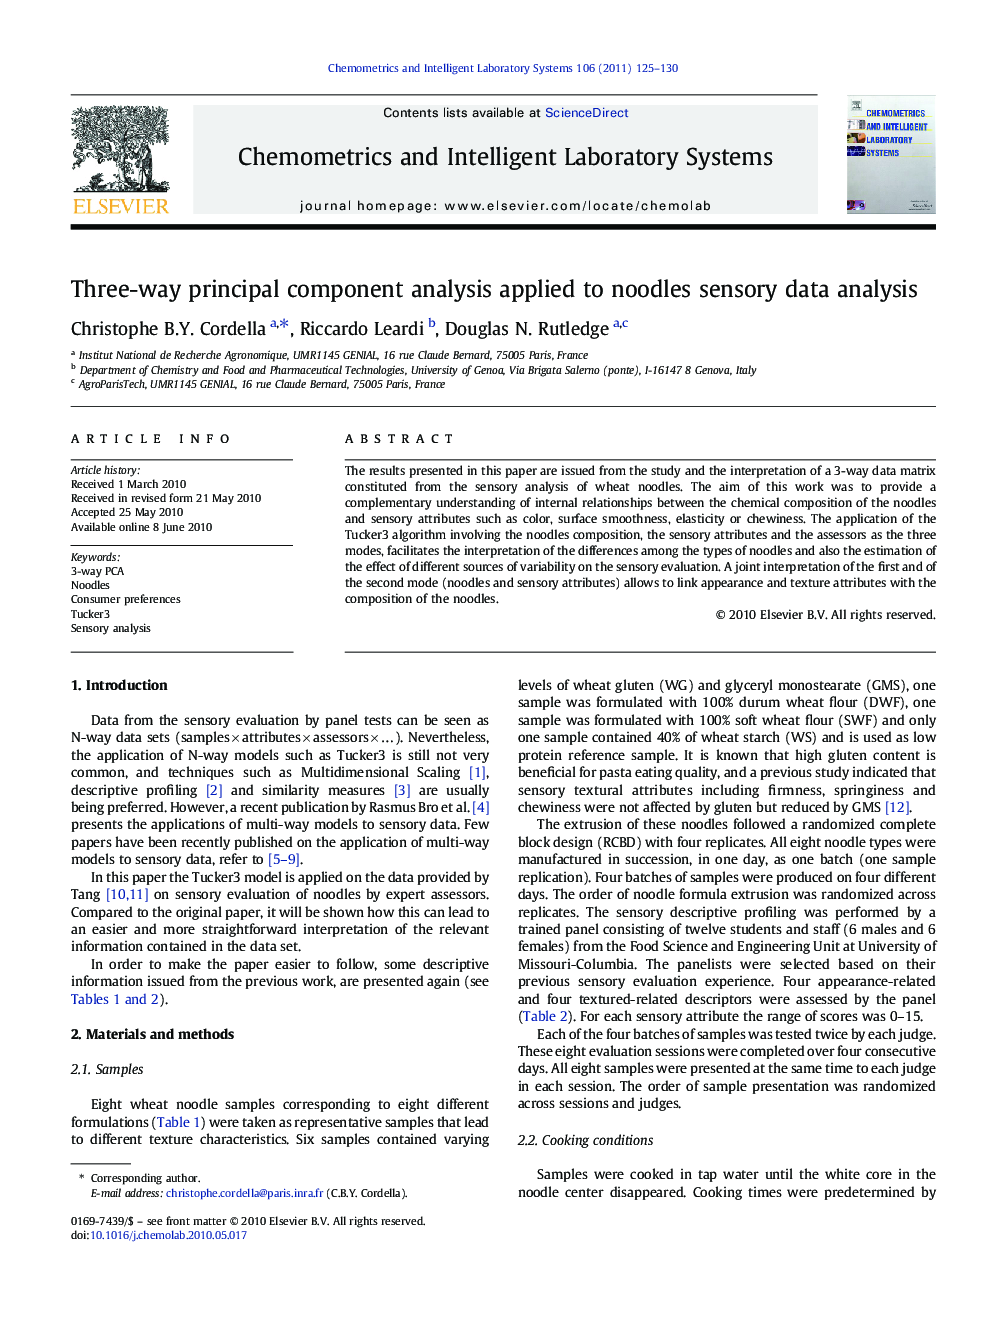 Three-way principal component analysis applied to noodles sensory data analysis